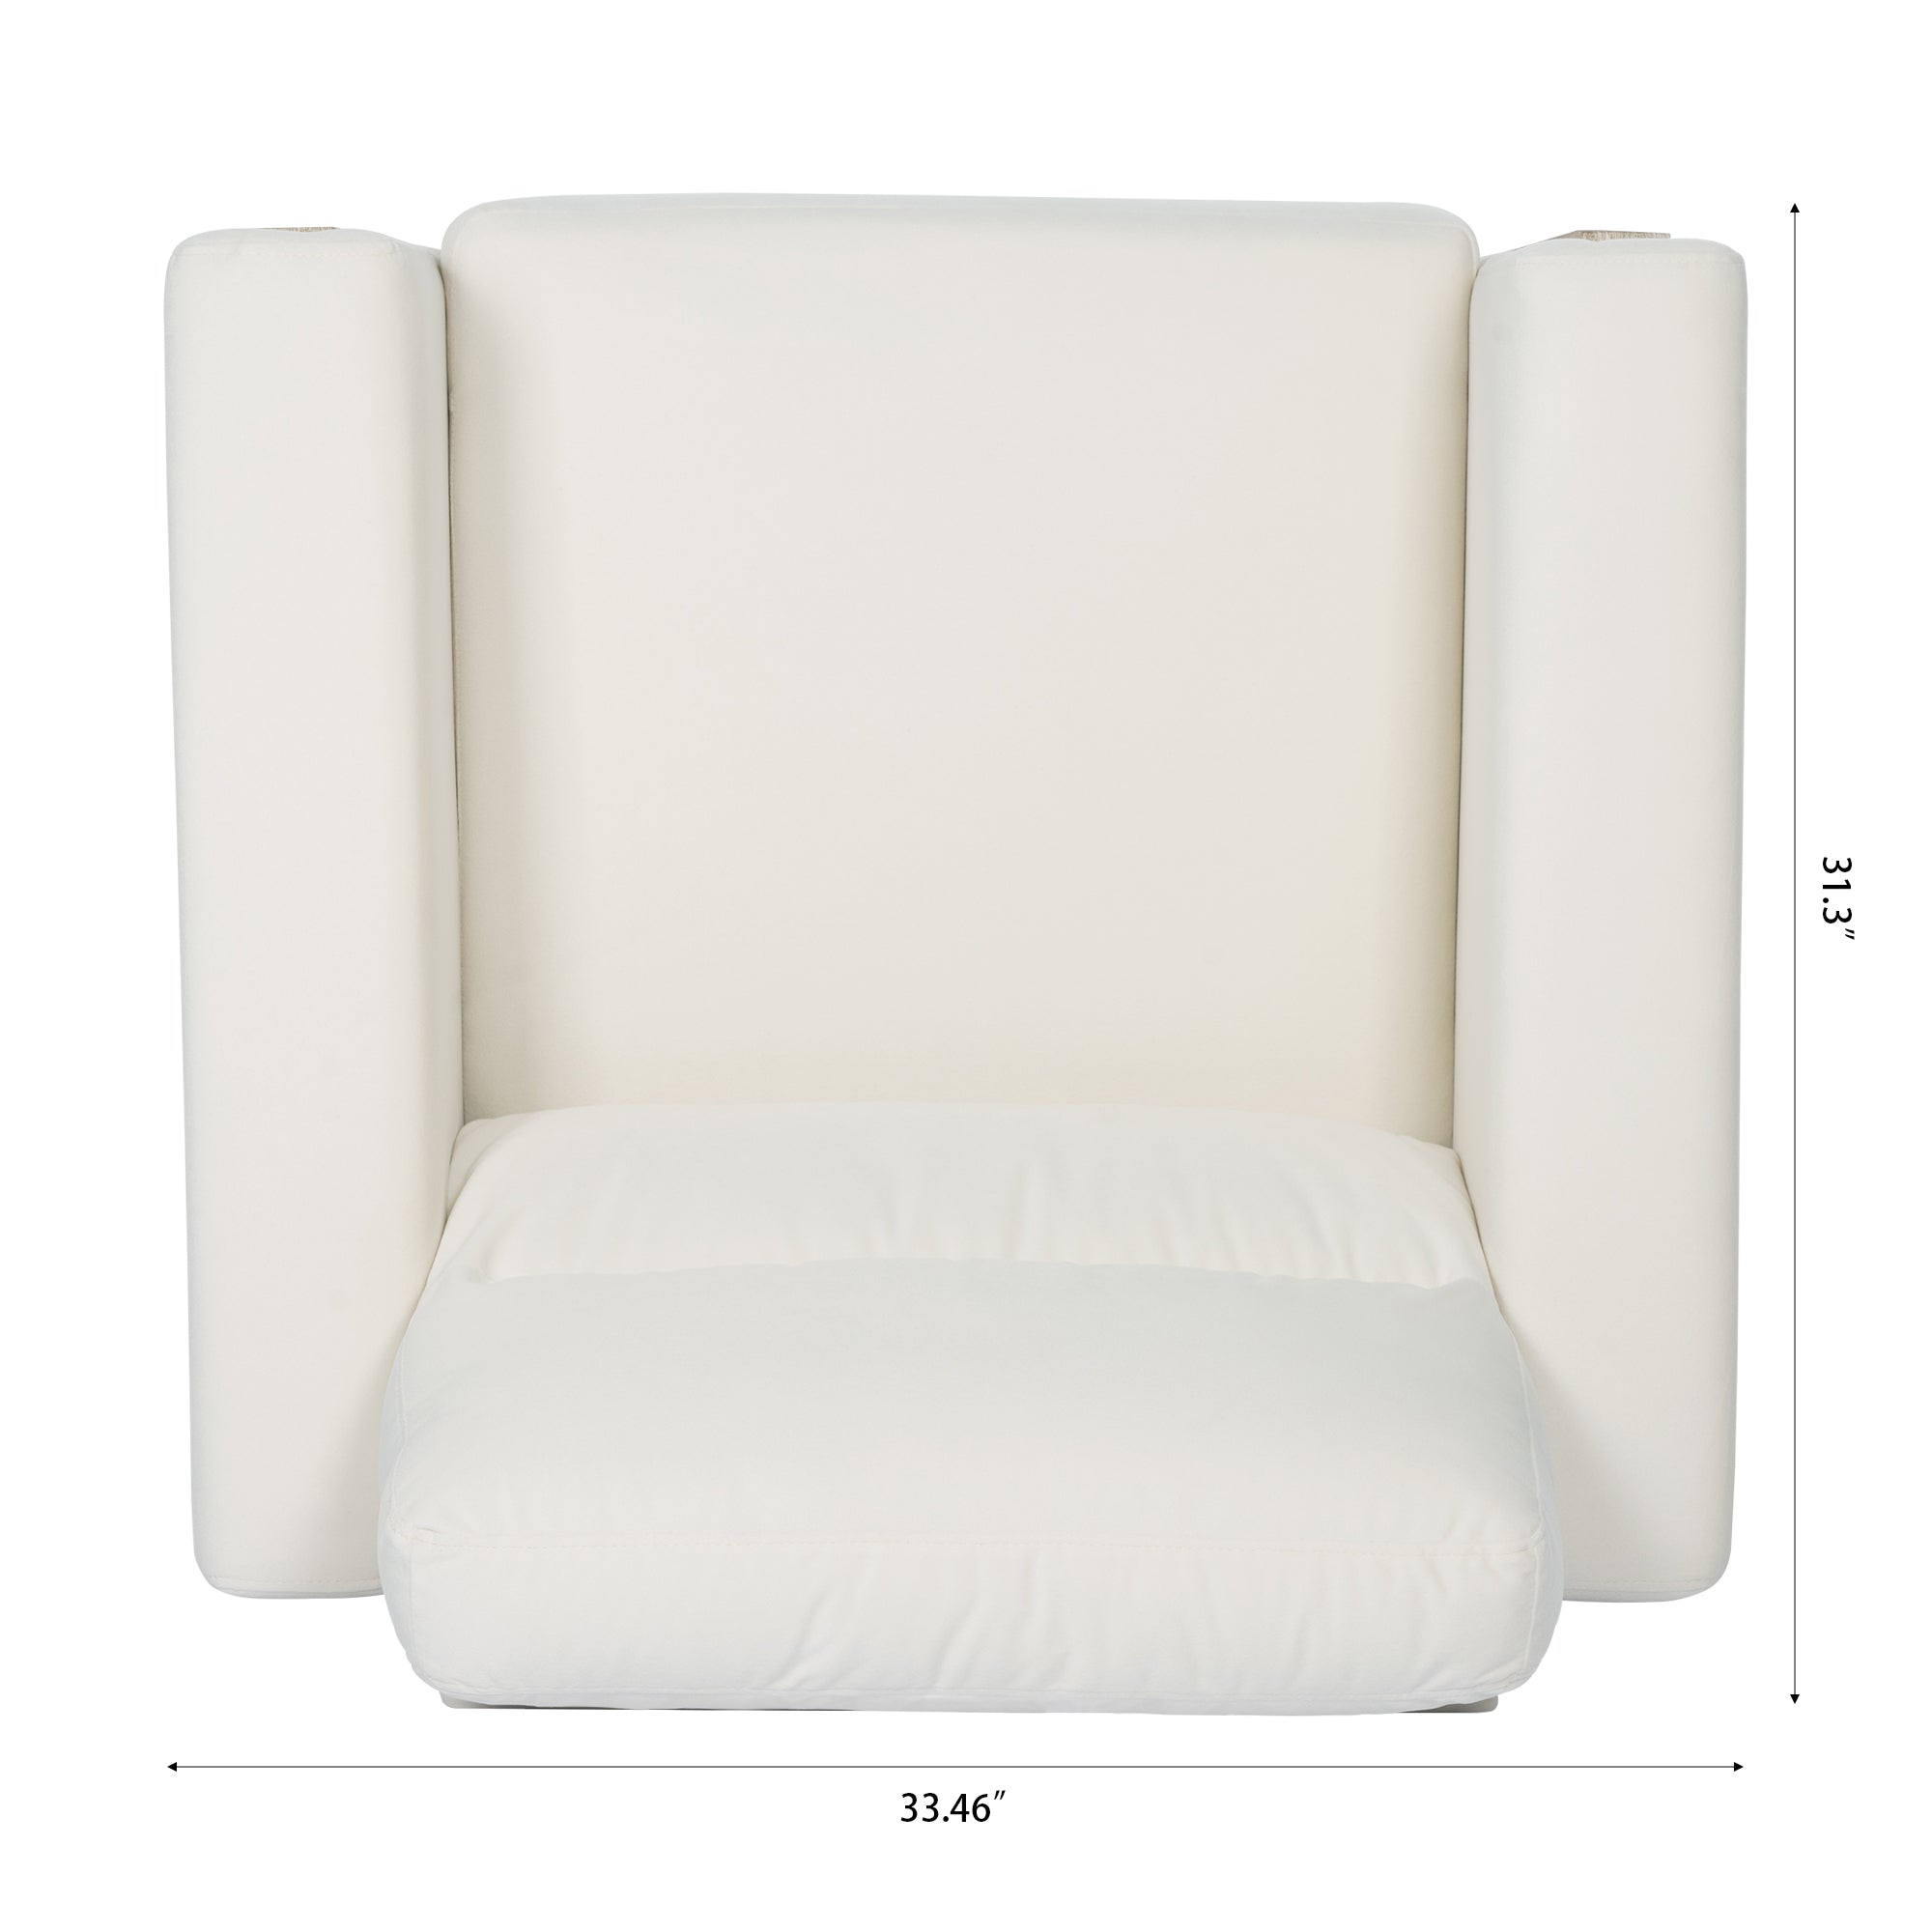 Bellemave® Comfortable Solid Wood 1 Seater Sofa Bellemave®